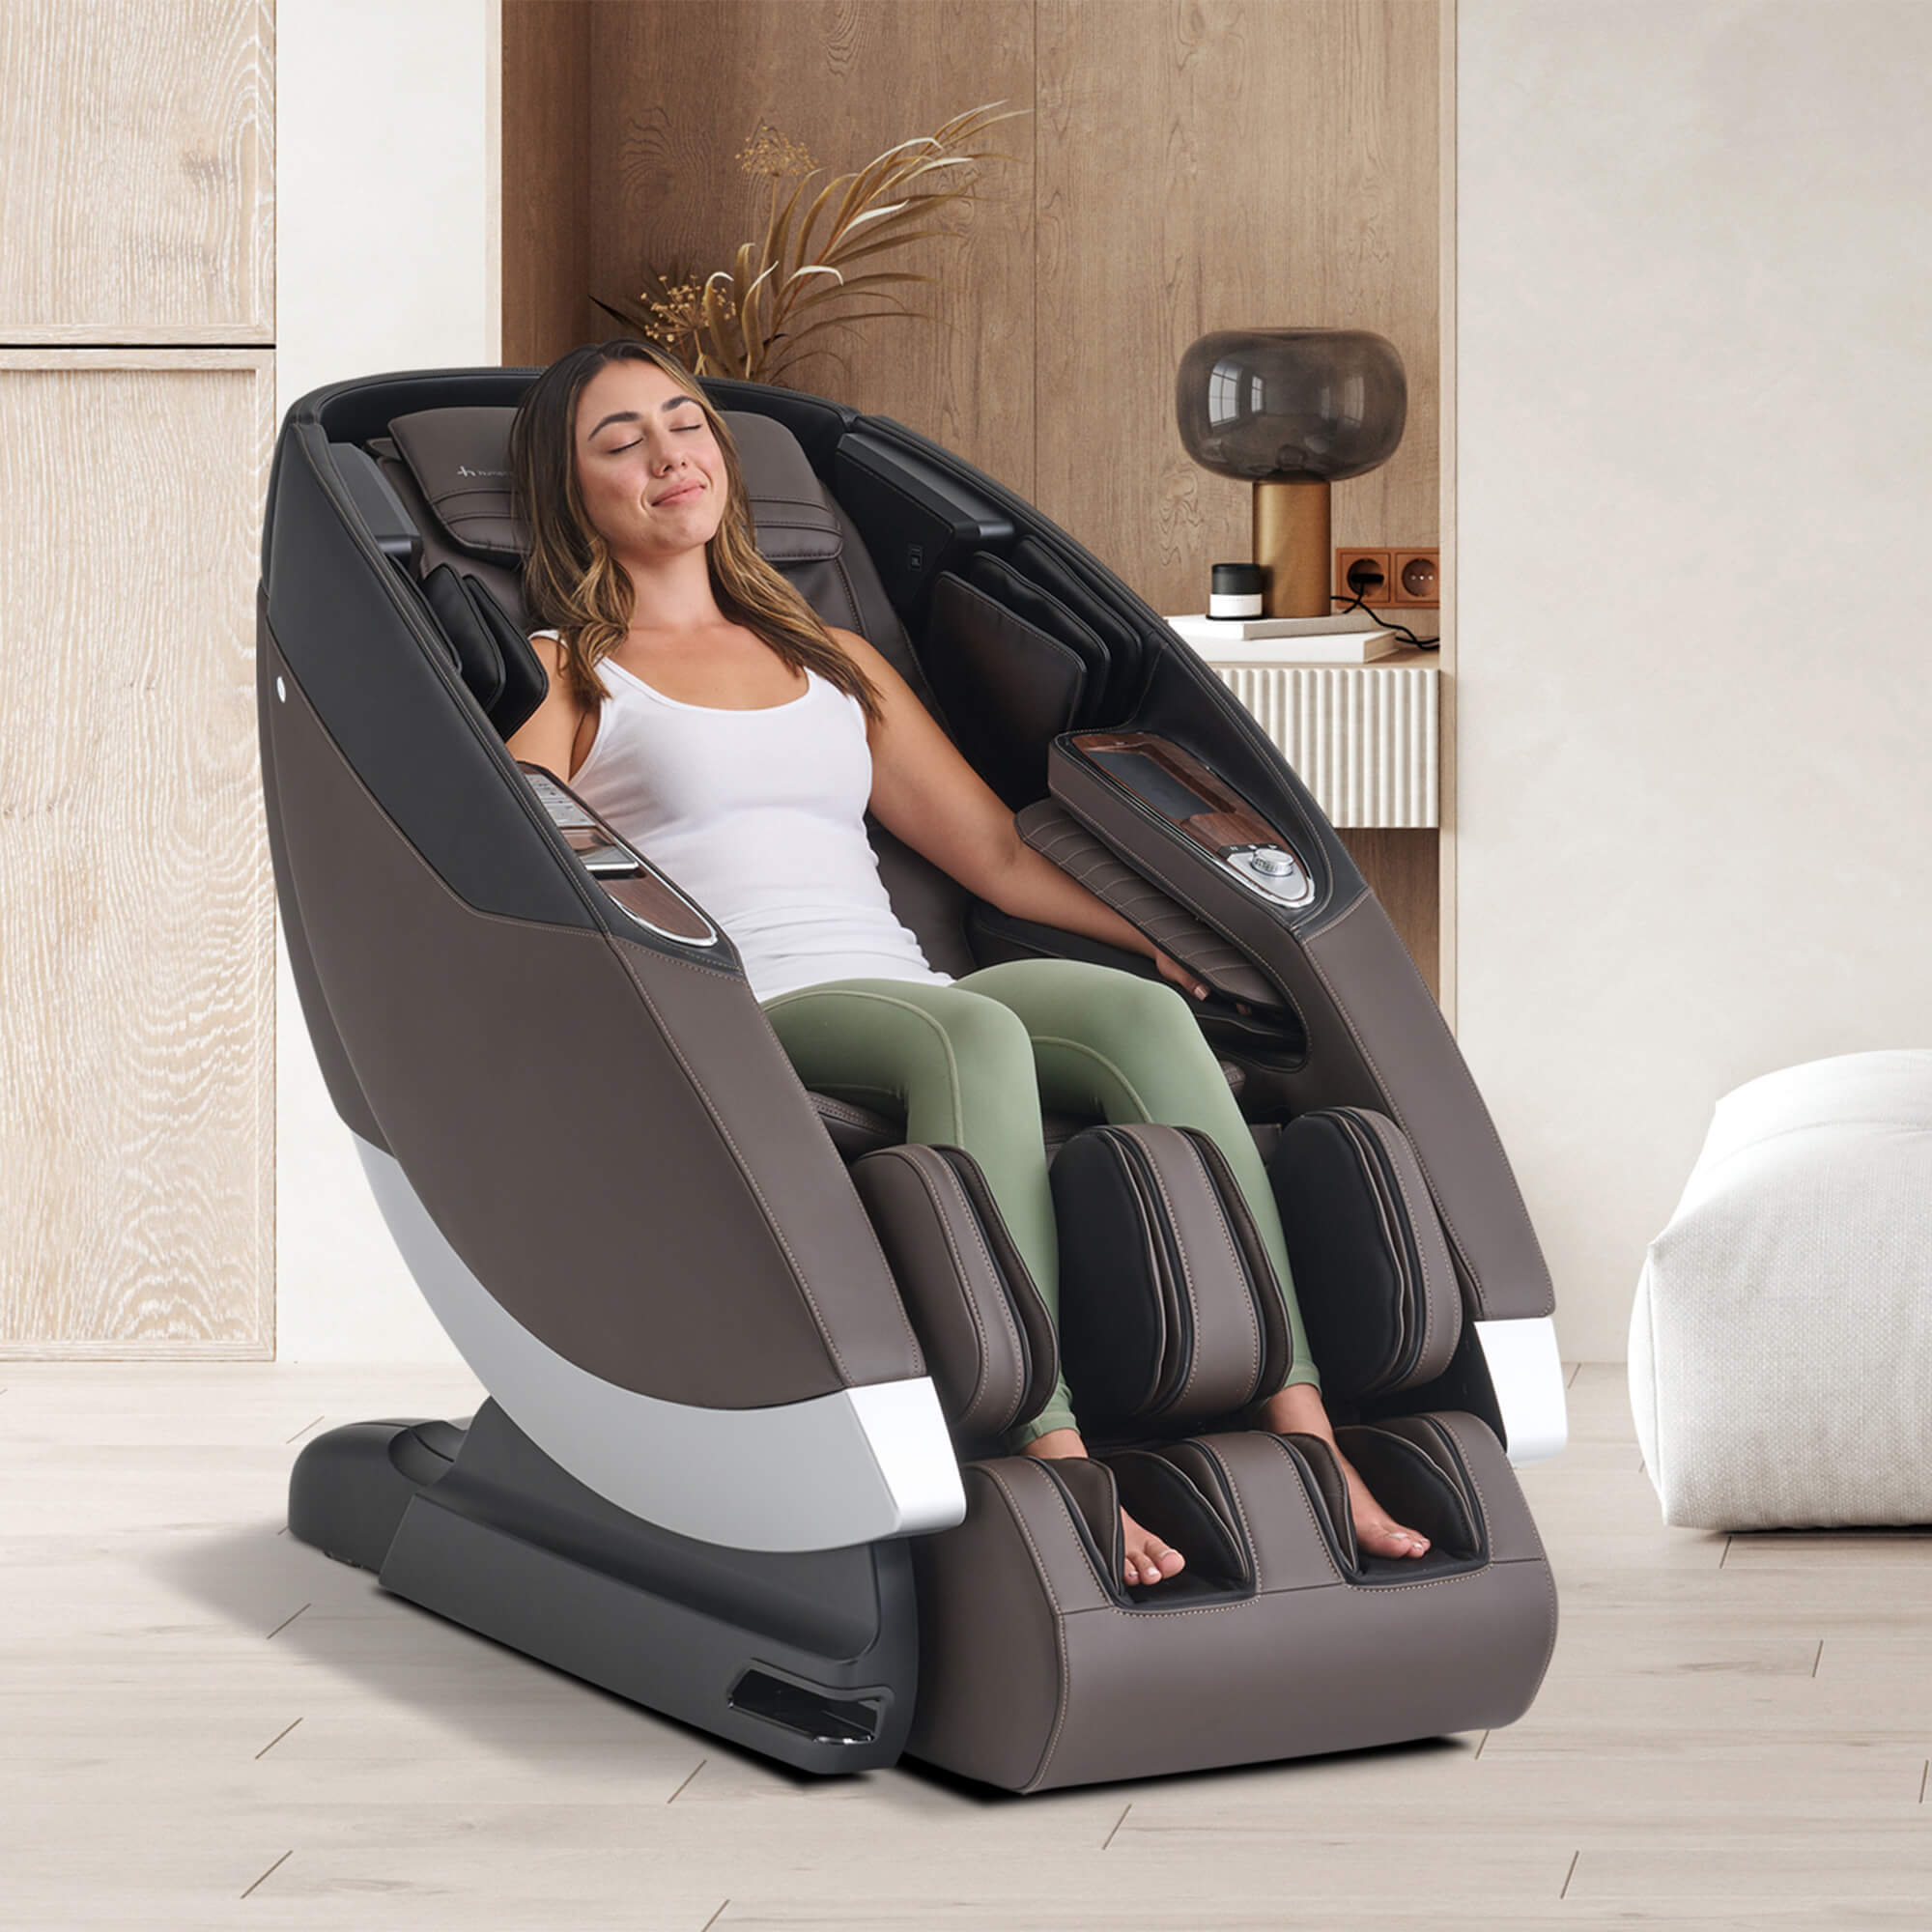 Super Novo 2.0 massage chair